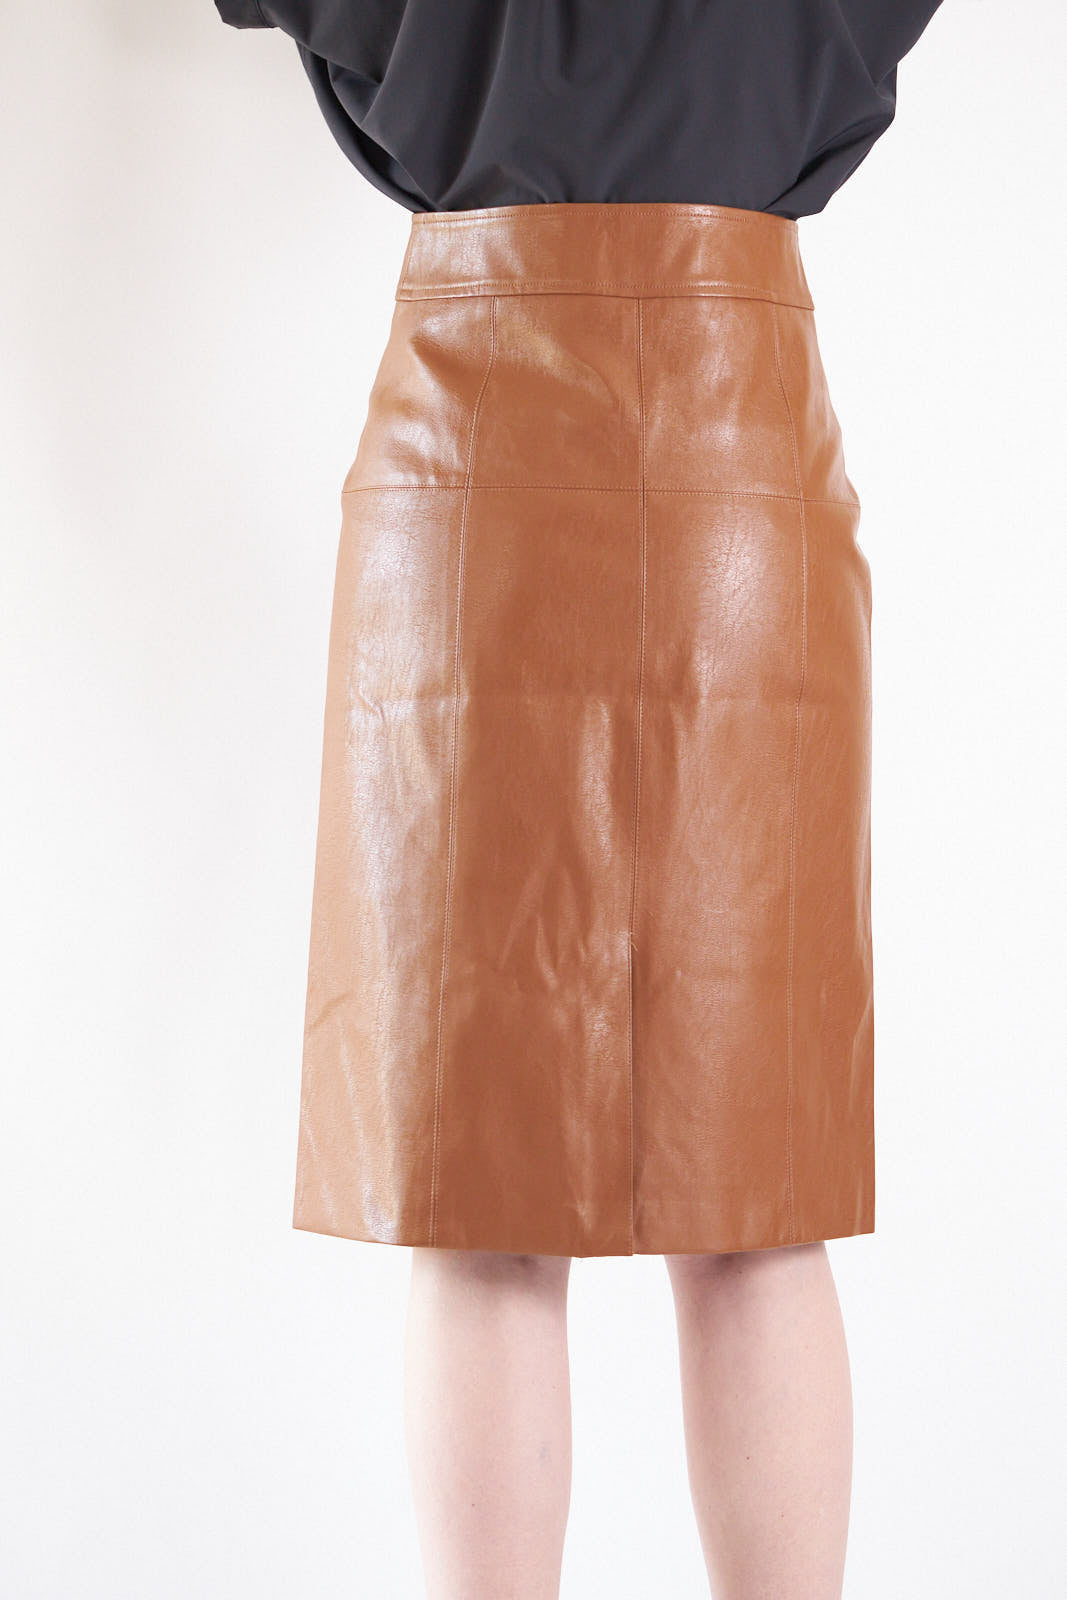 Le Reussi vegan leather pencil skirt close up